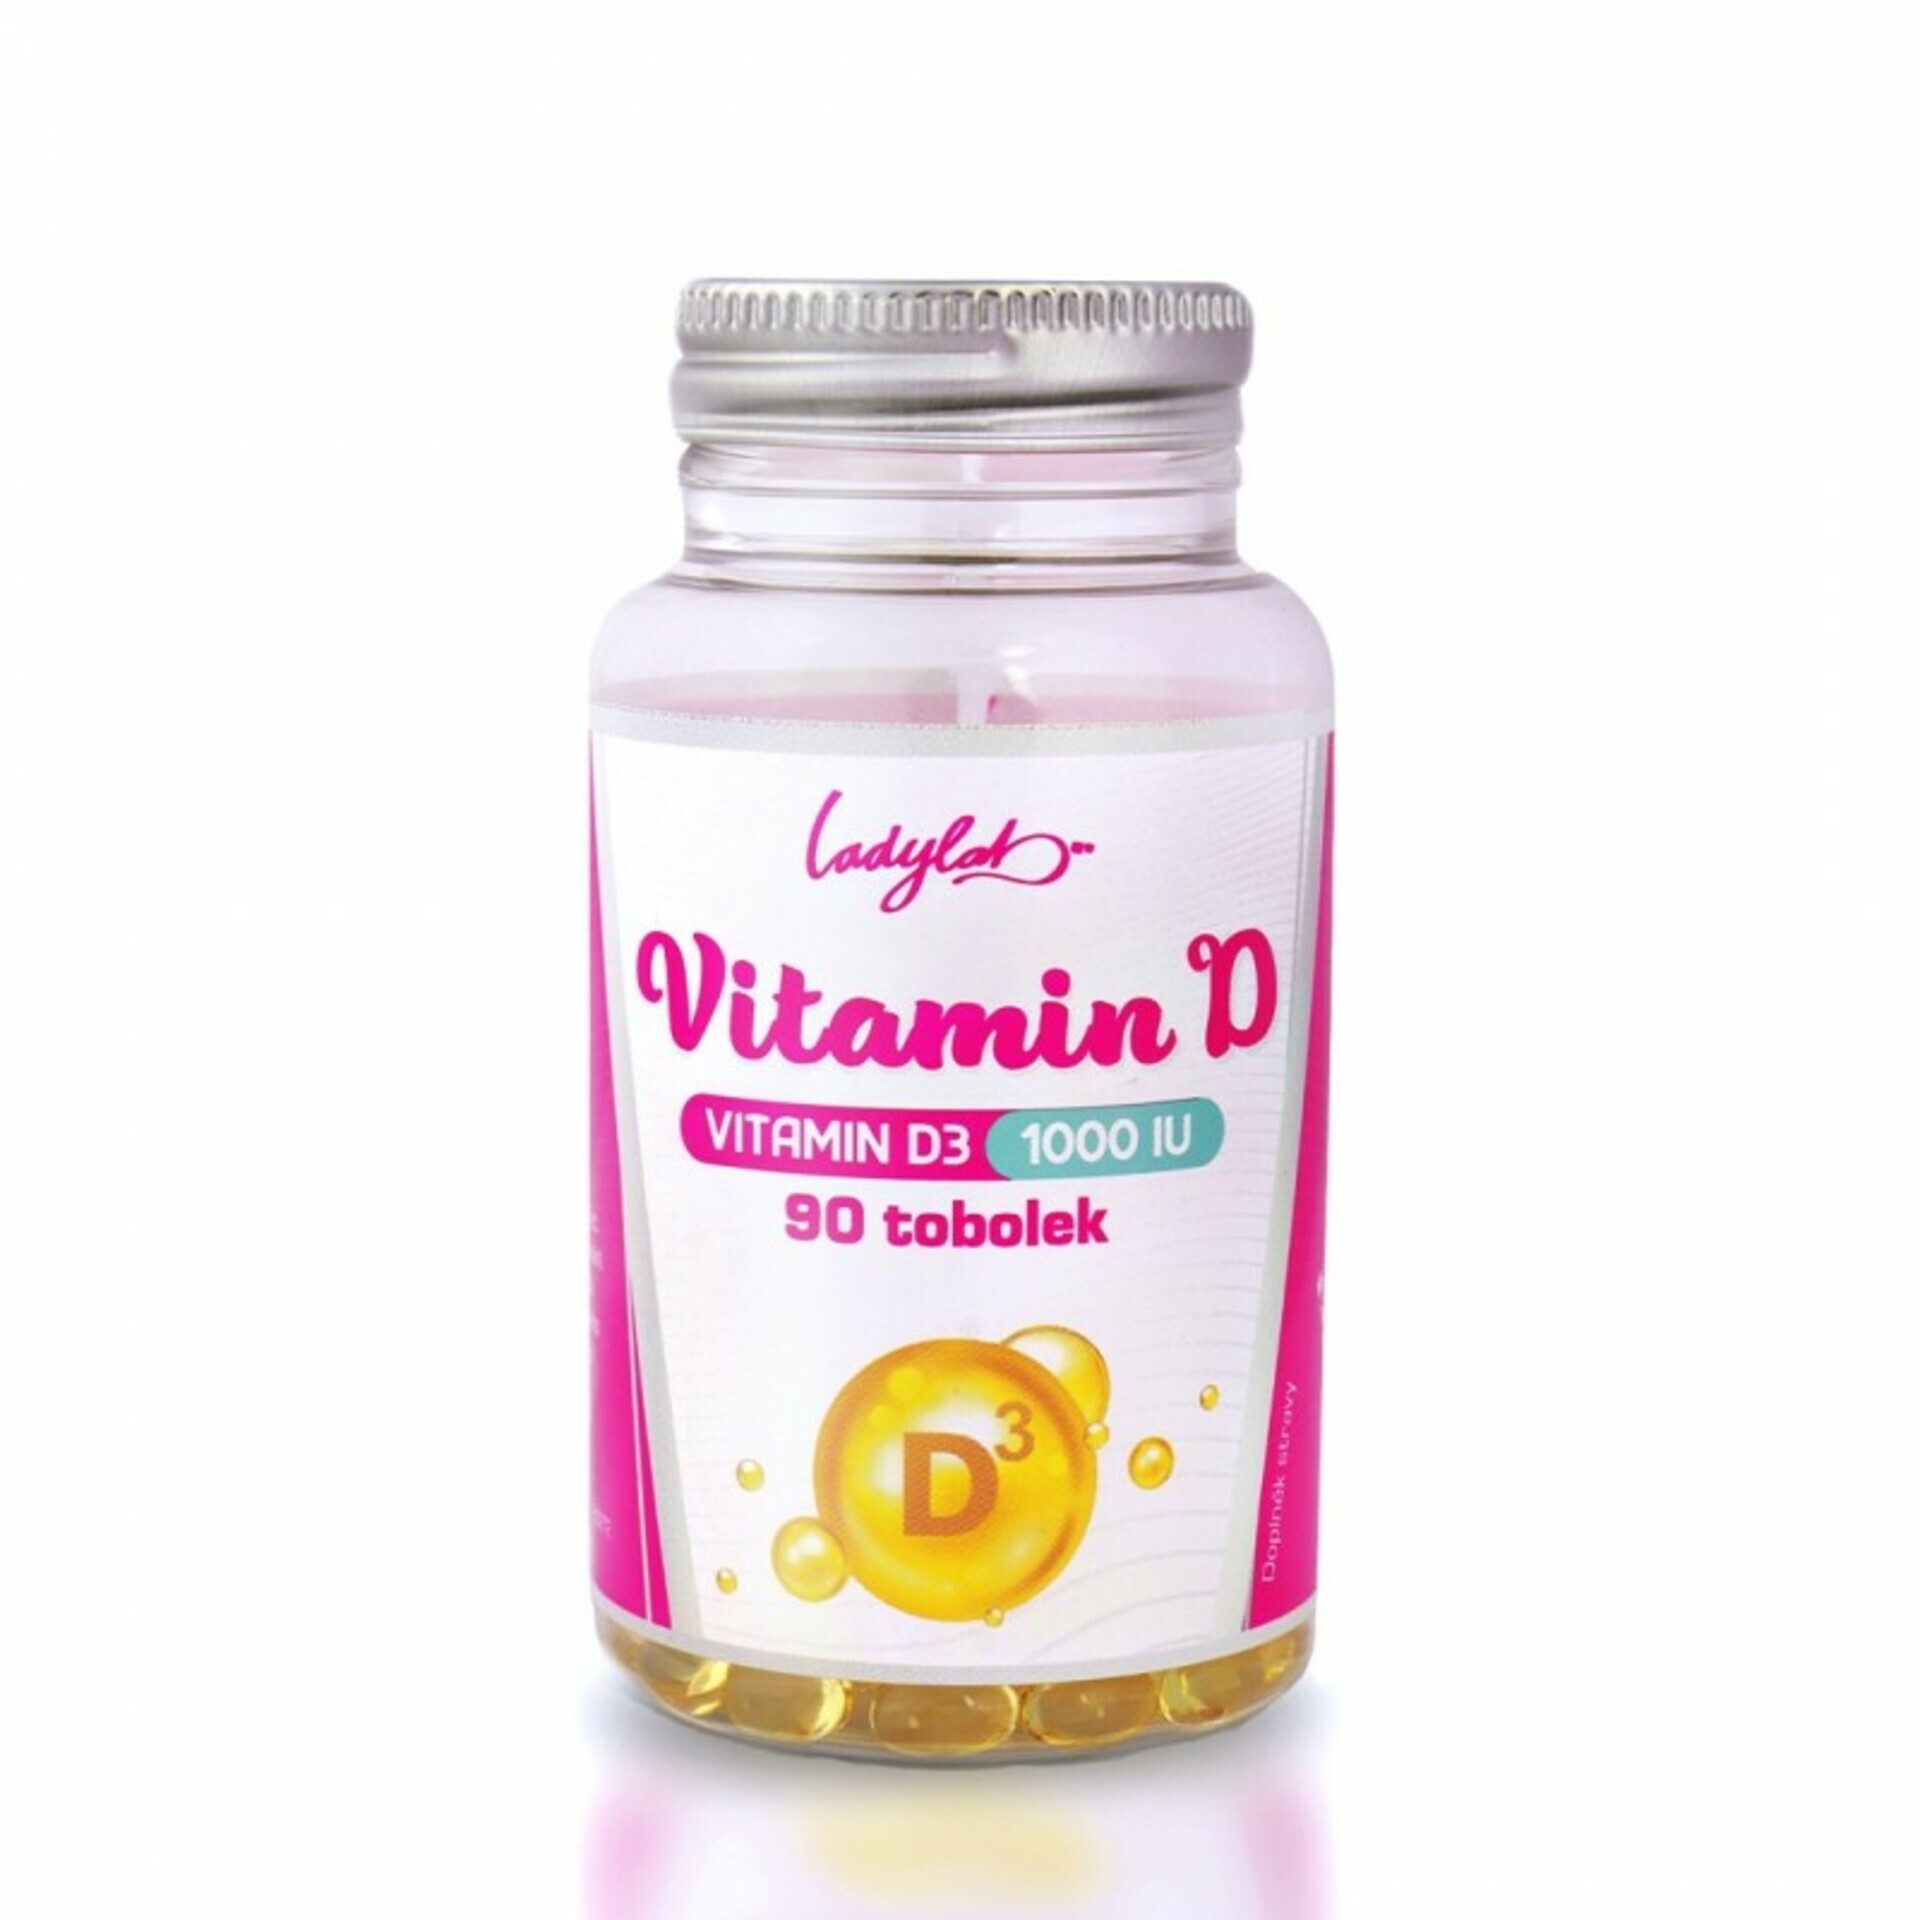 Ladylab vitamin D expirace